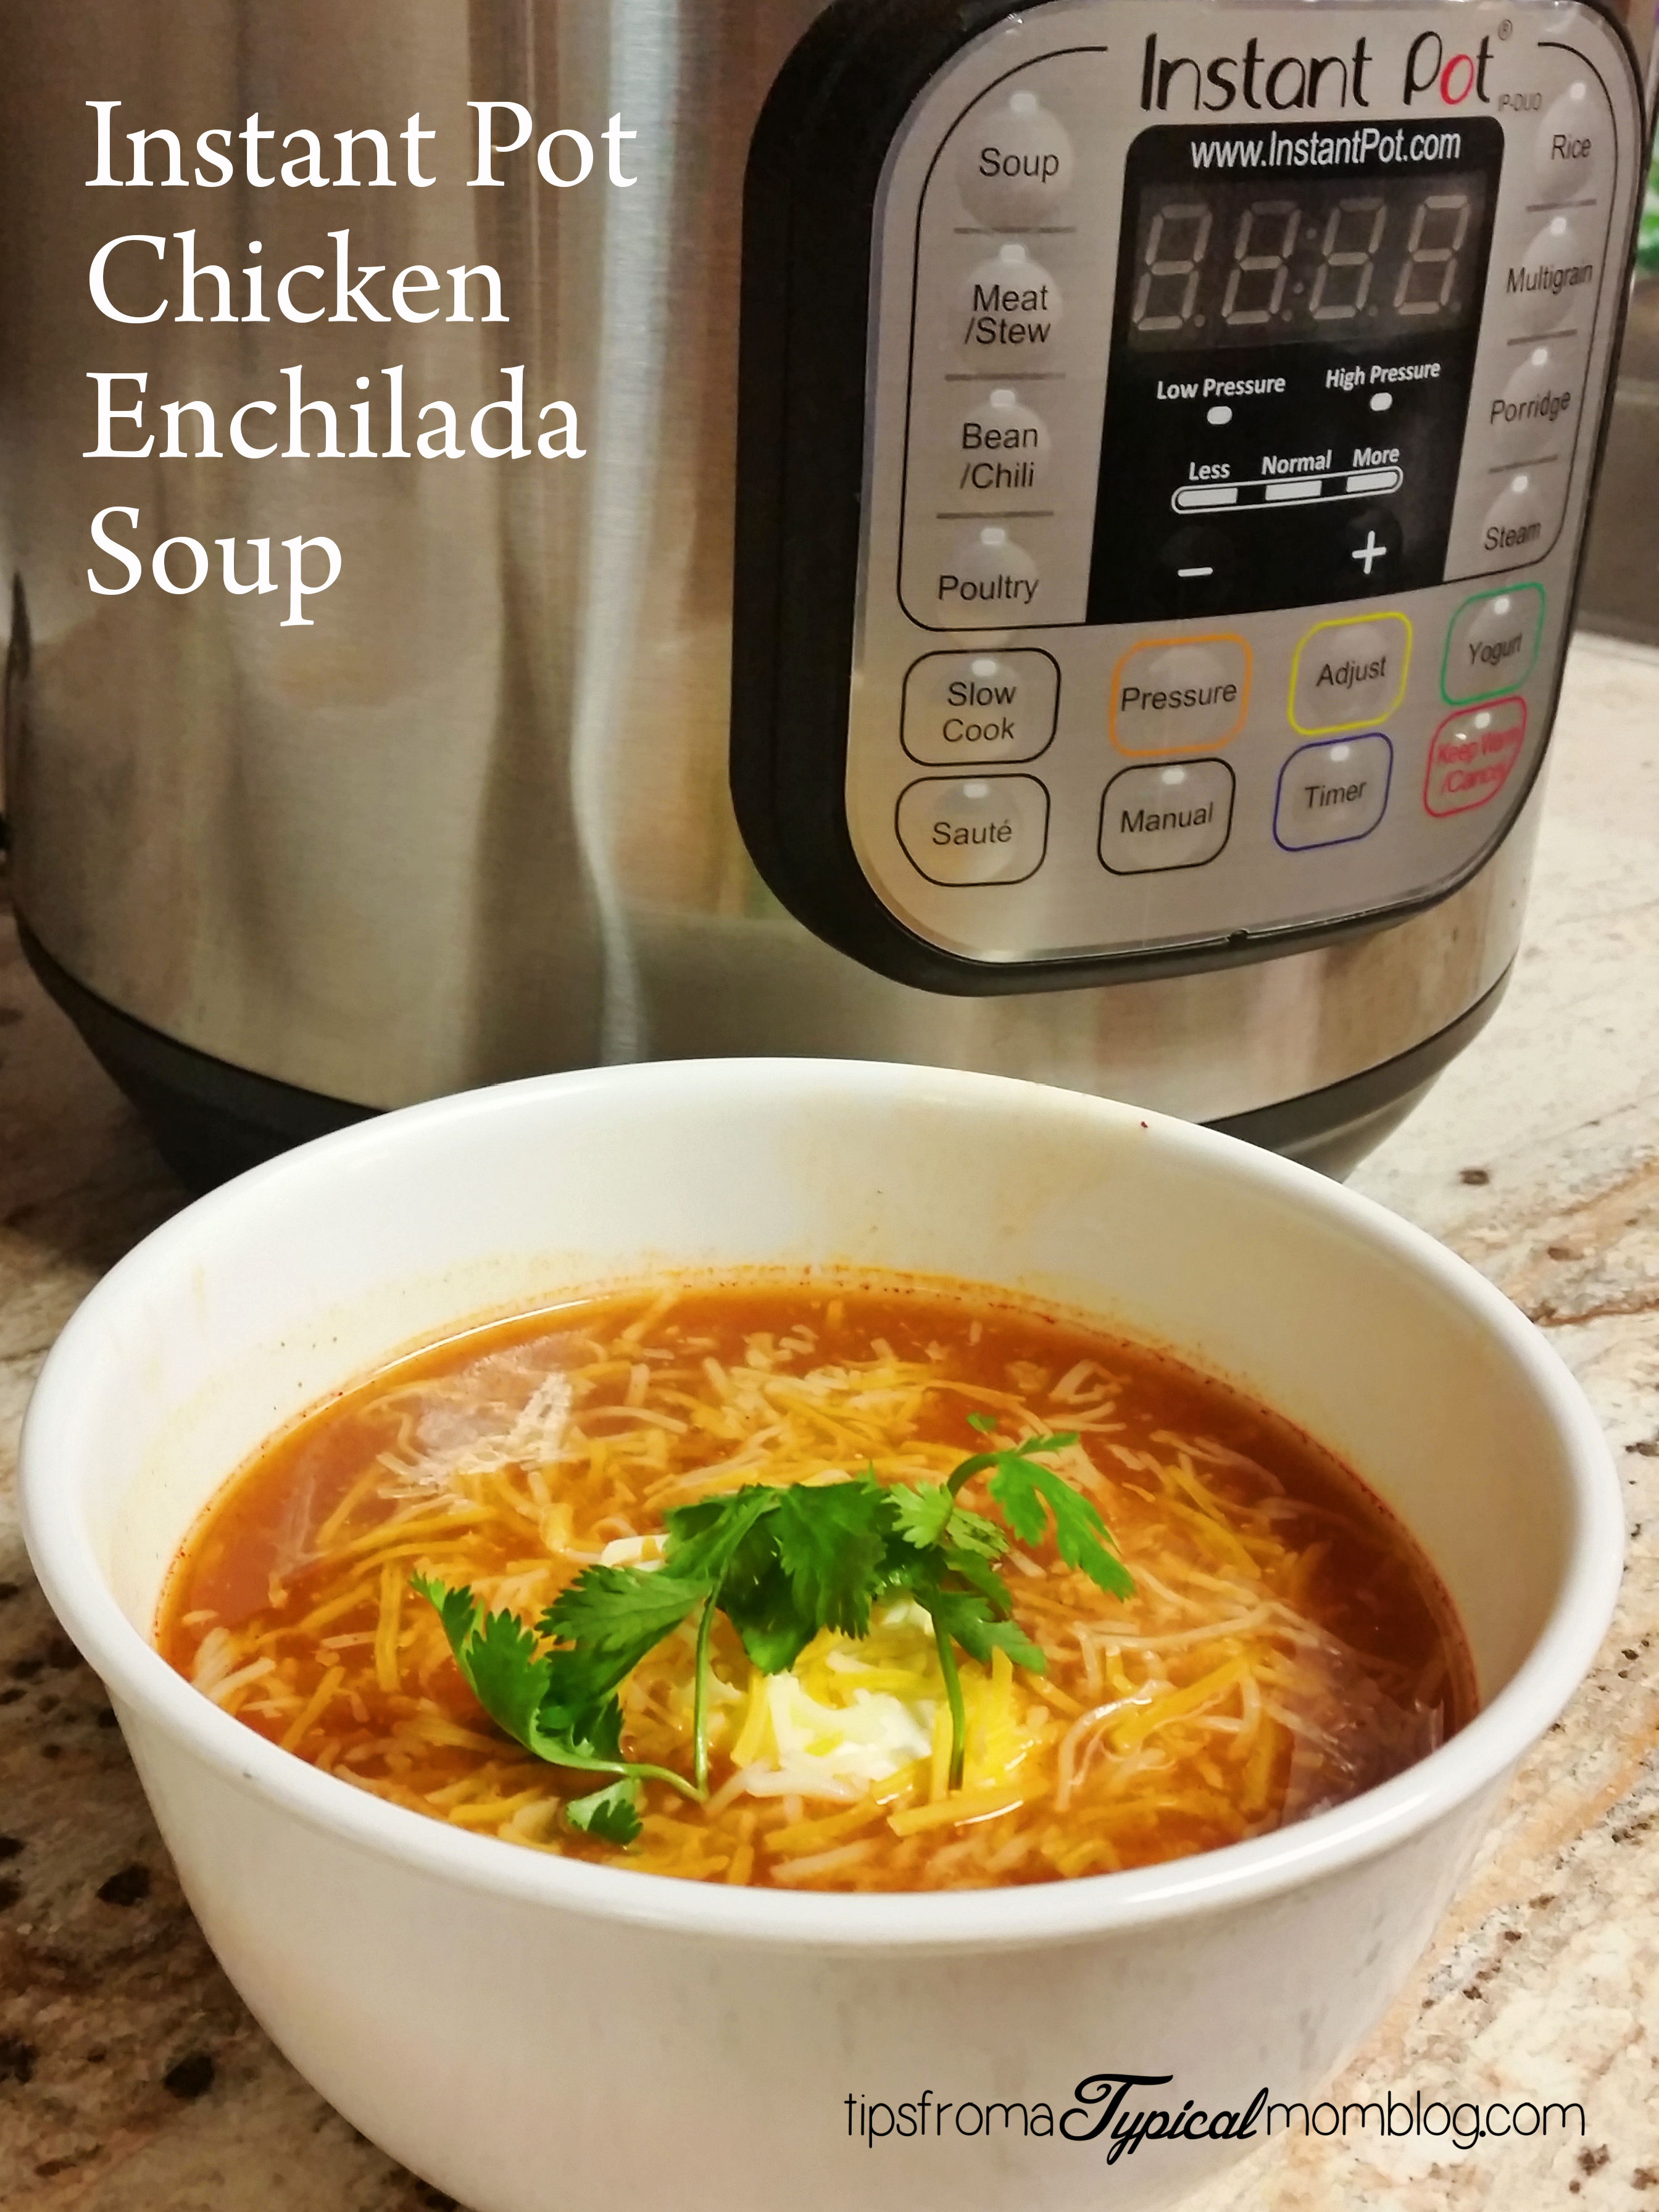 Instant Pot Enchilada Chicken Soup Recipe